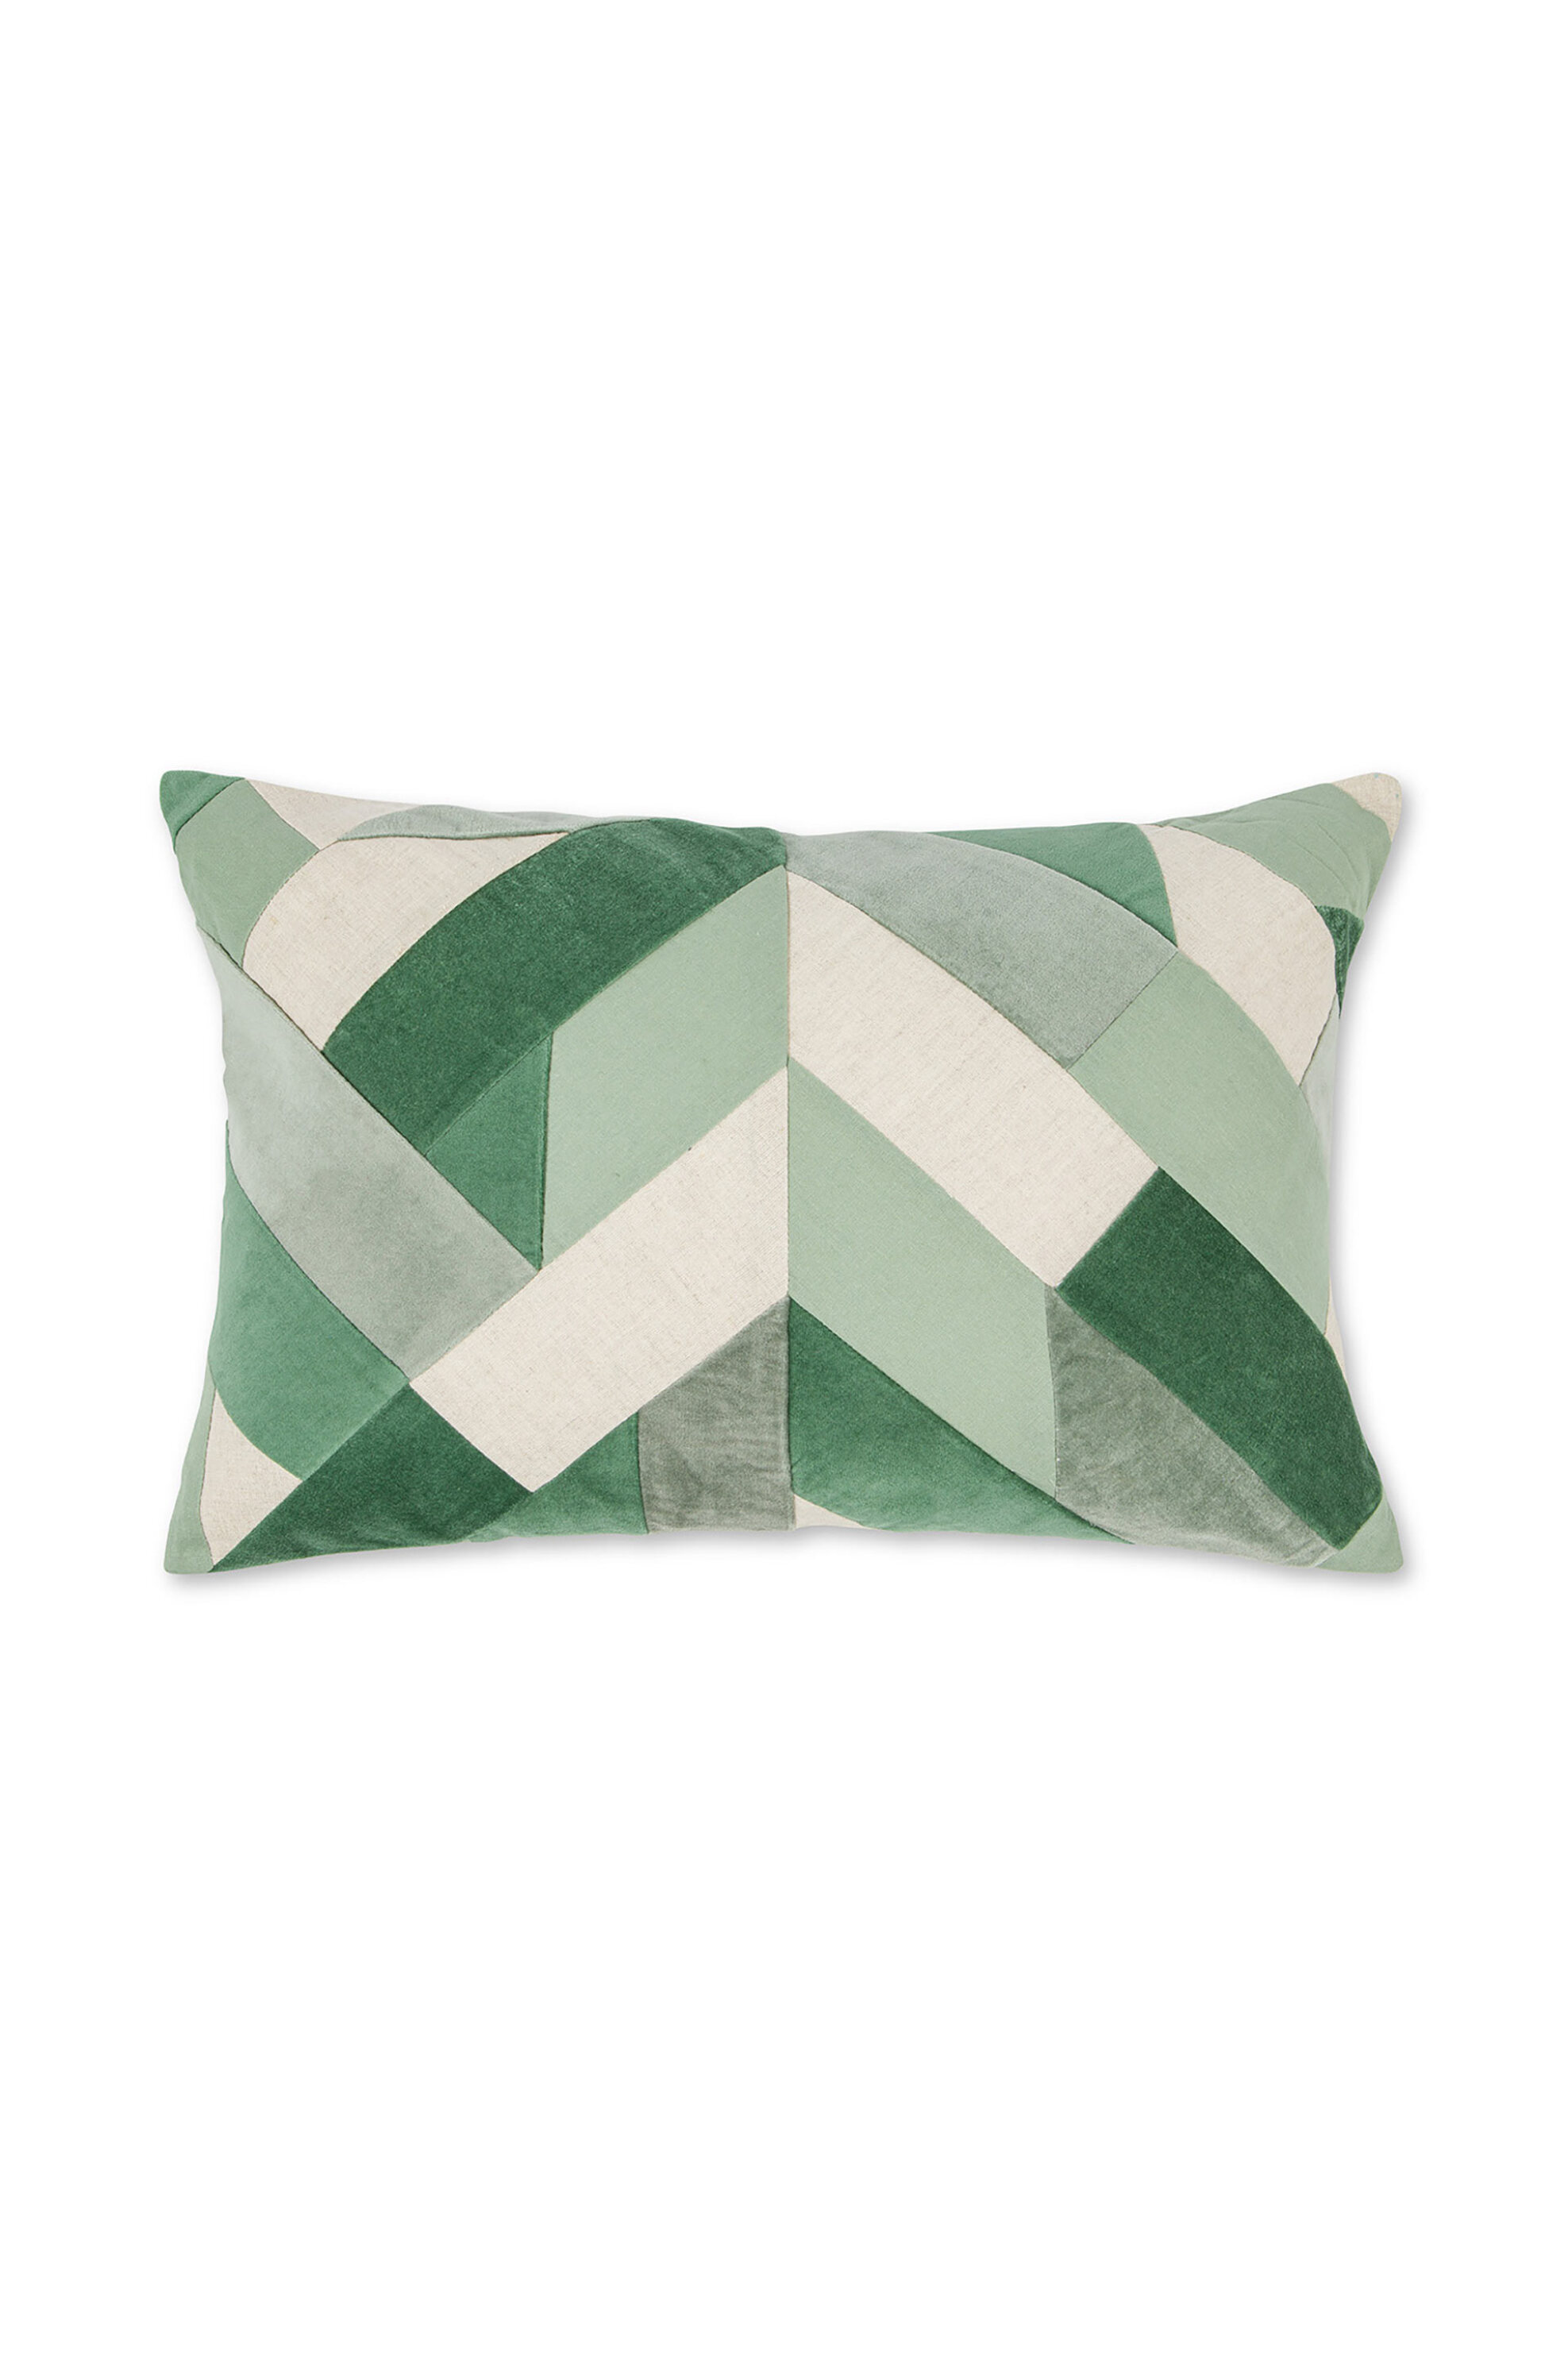 Home > ΔΙΑΚΟΣΜΗΣΗ > Διακοσμητικά Μαξιλάρια Coincasa διακοσμητικό μαξιλάρι με γεωμετρικό σχέδιο 50 x 35 cm - 007395160 Πράσινο